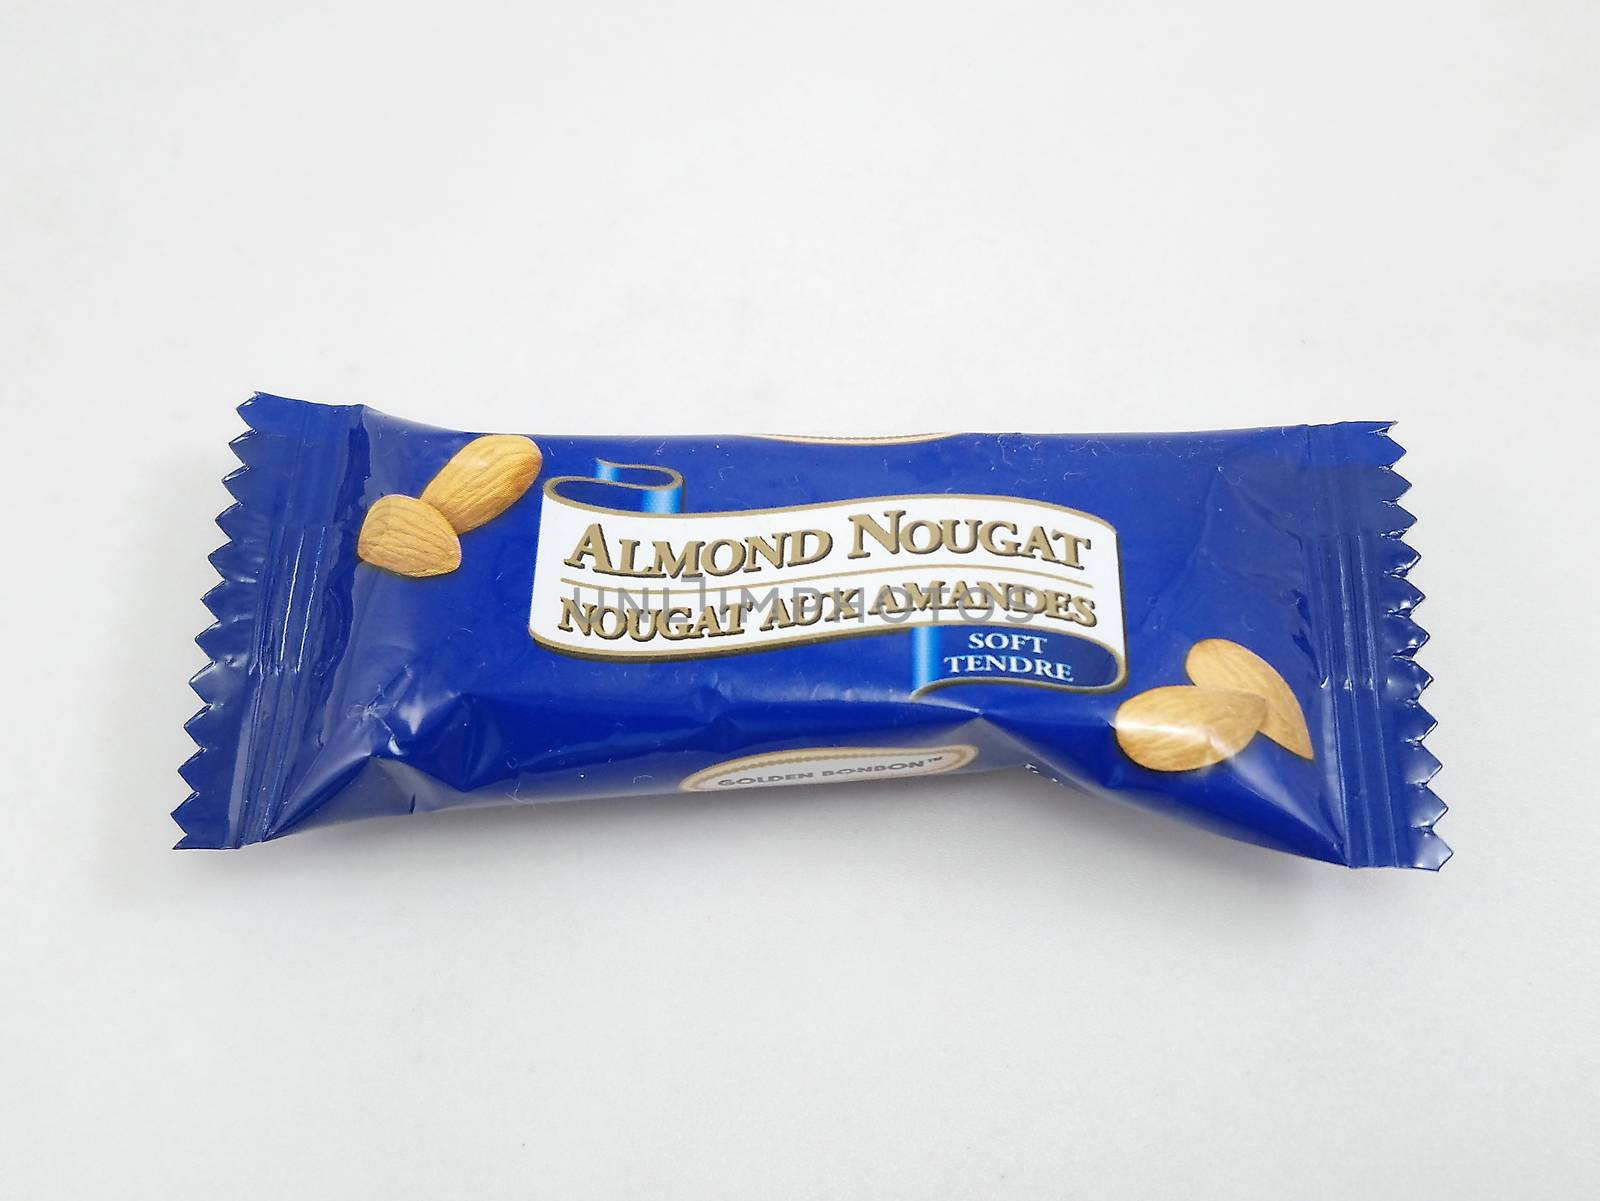 Almond nougat nut soft bar in Manila, Philippines by imwaltersy